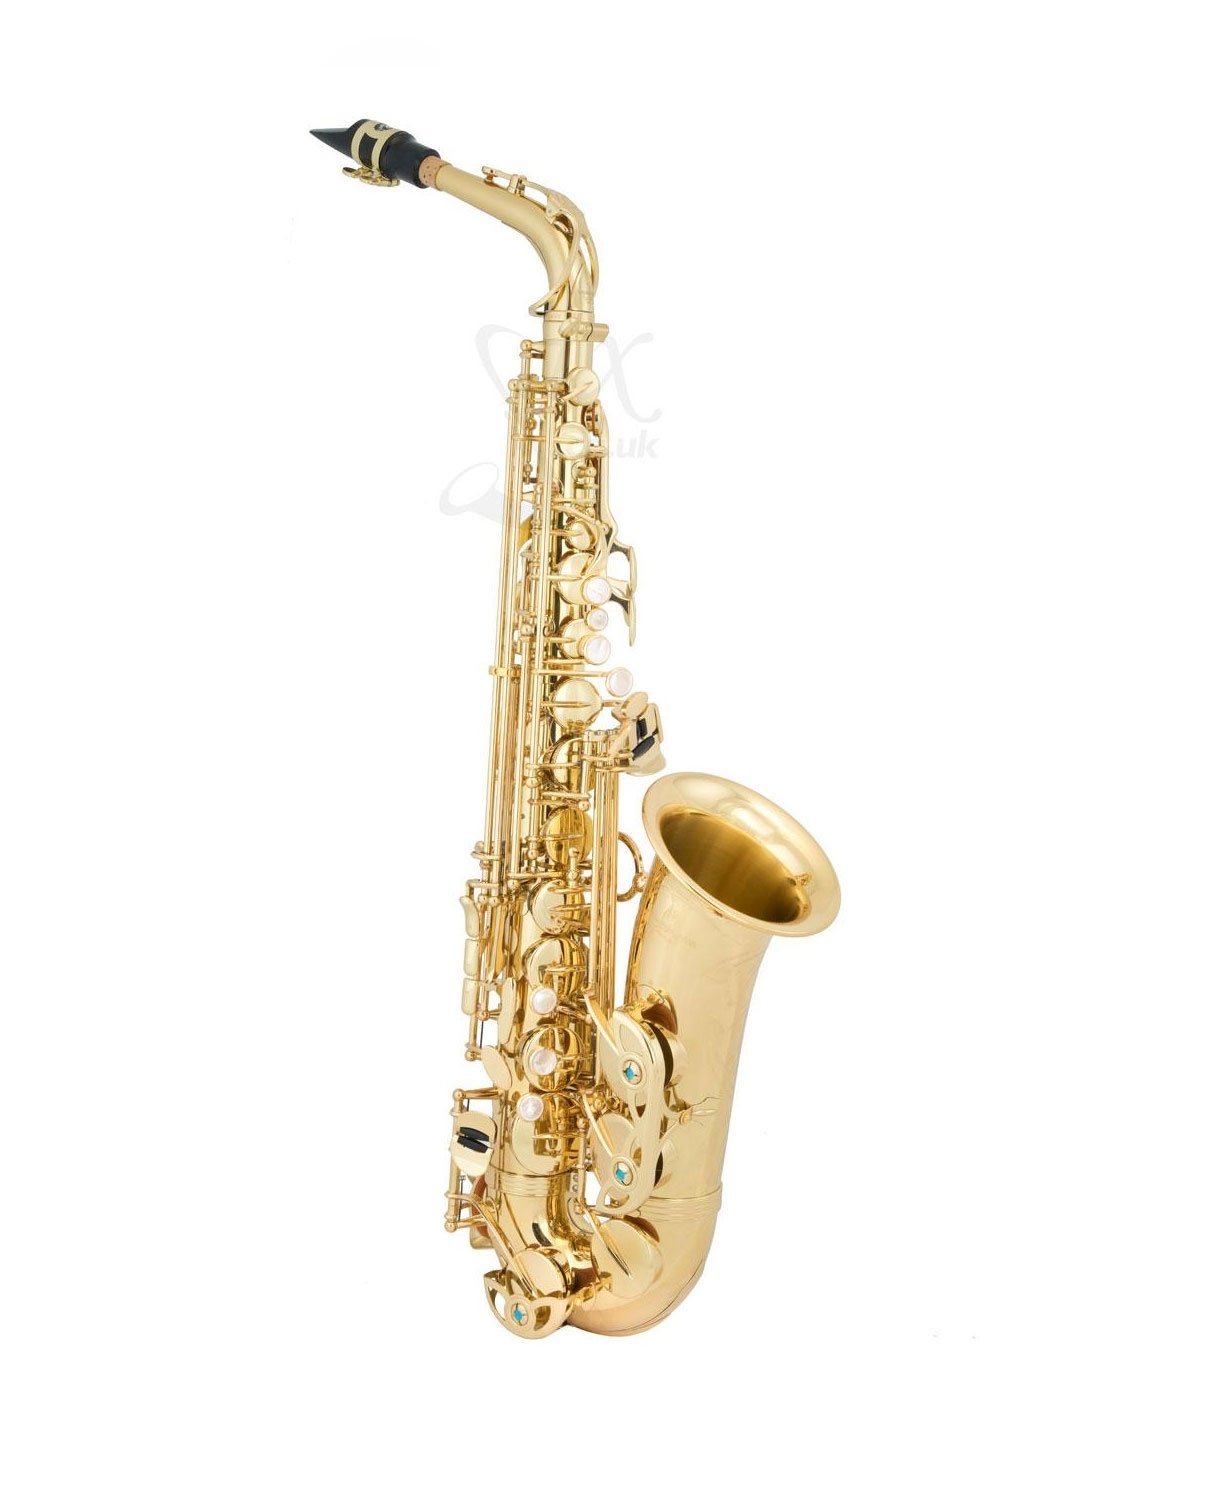 8yanagisawa-awo1-alto-saxophone-gold-lacquer-6015128-1600_1212x1500_140618.jpg